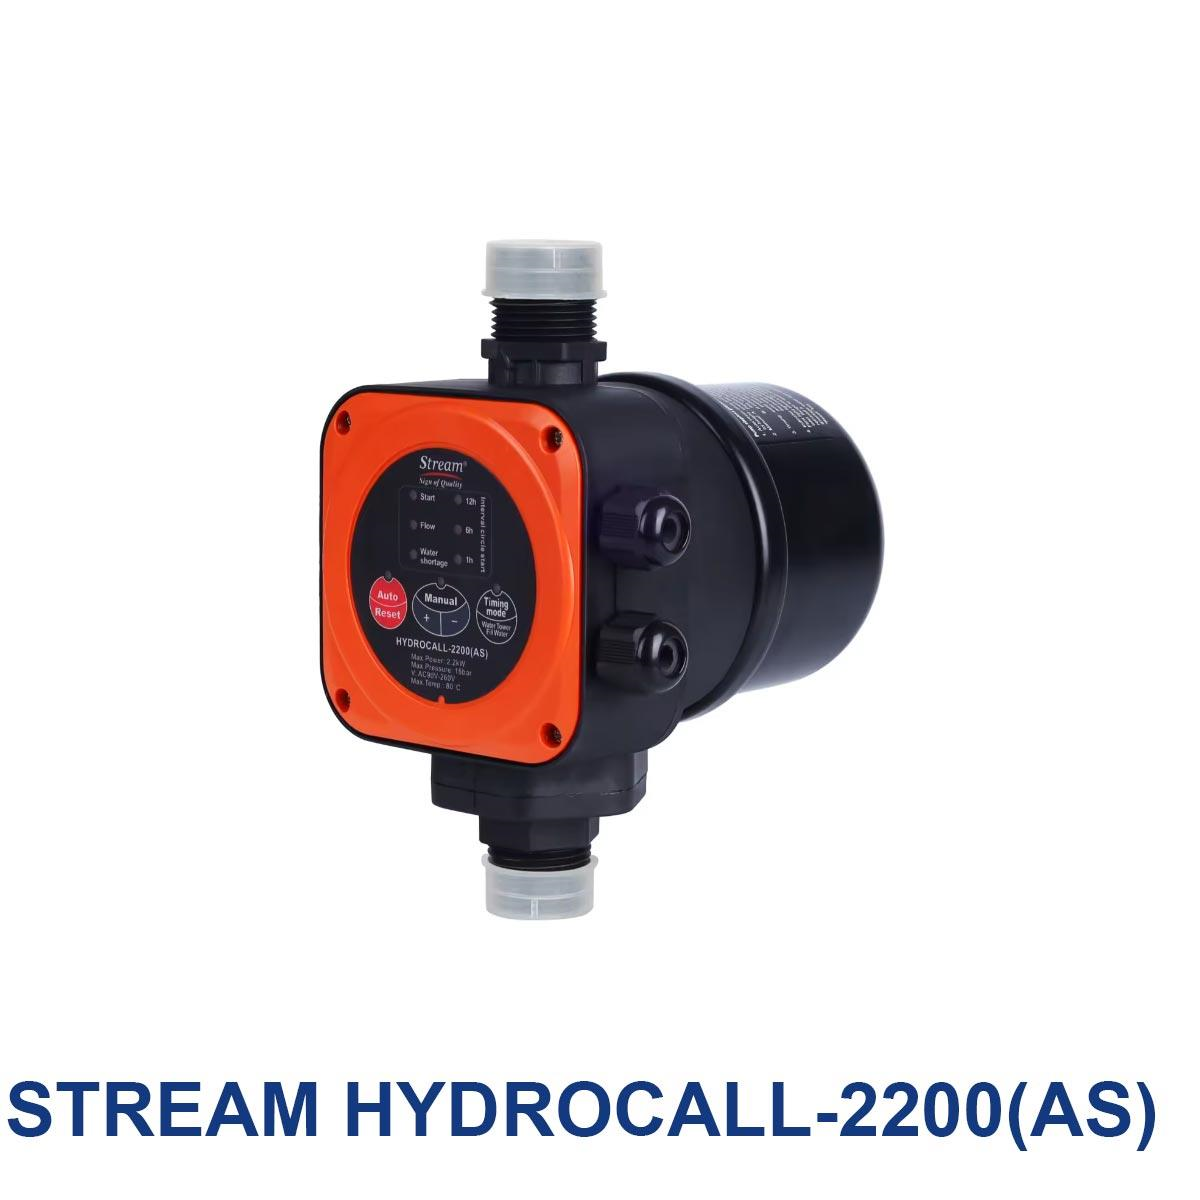 STREAM-HYDROCALL-2200(AS)